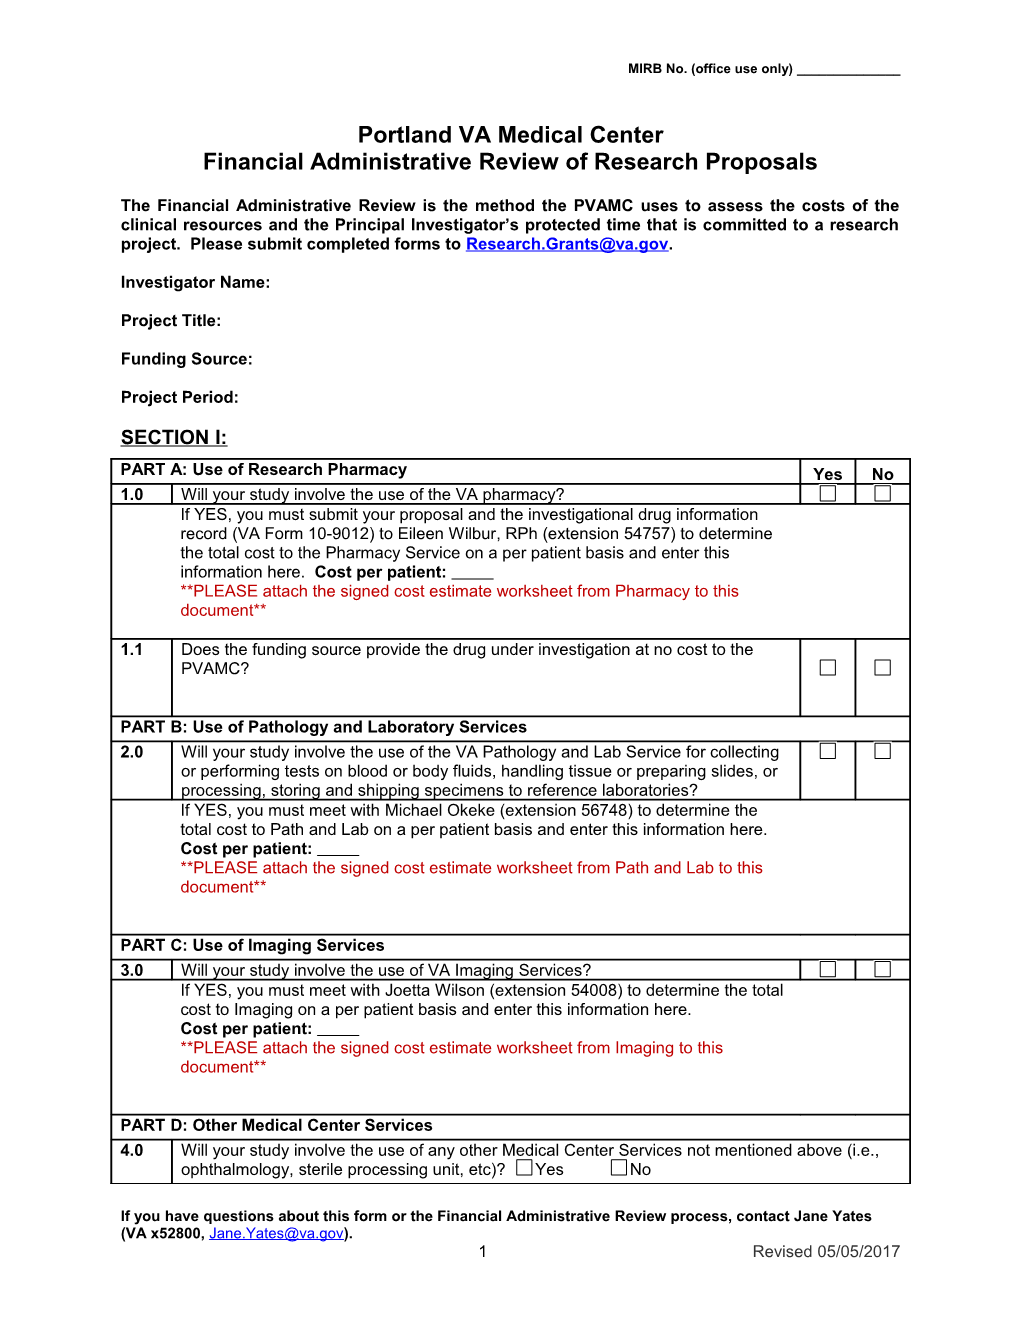 Administrative Review Form (Portland VA Medical Center Research Service)